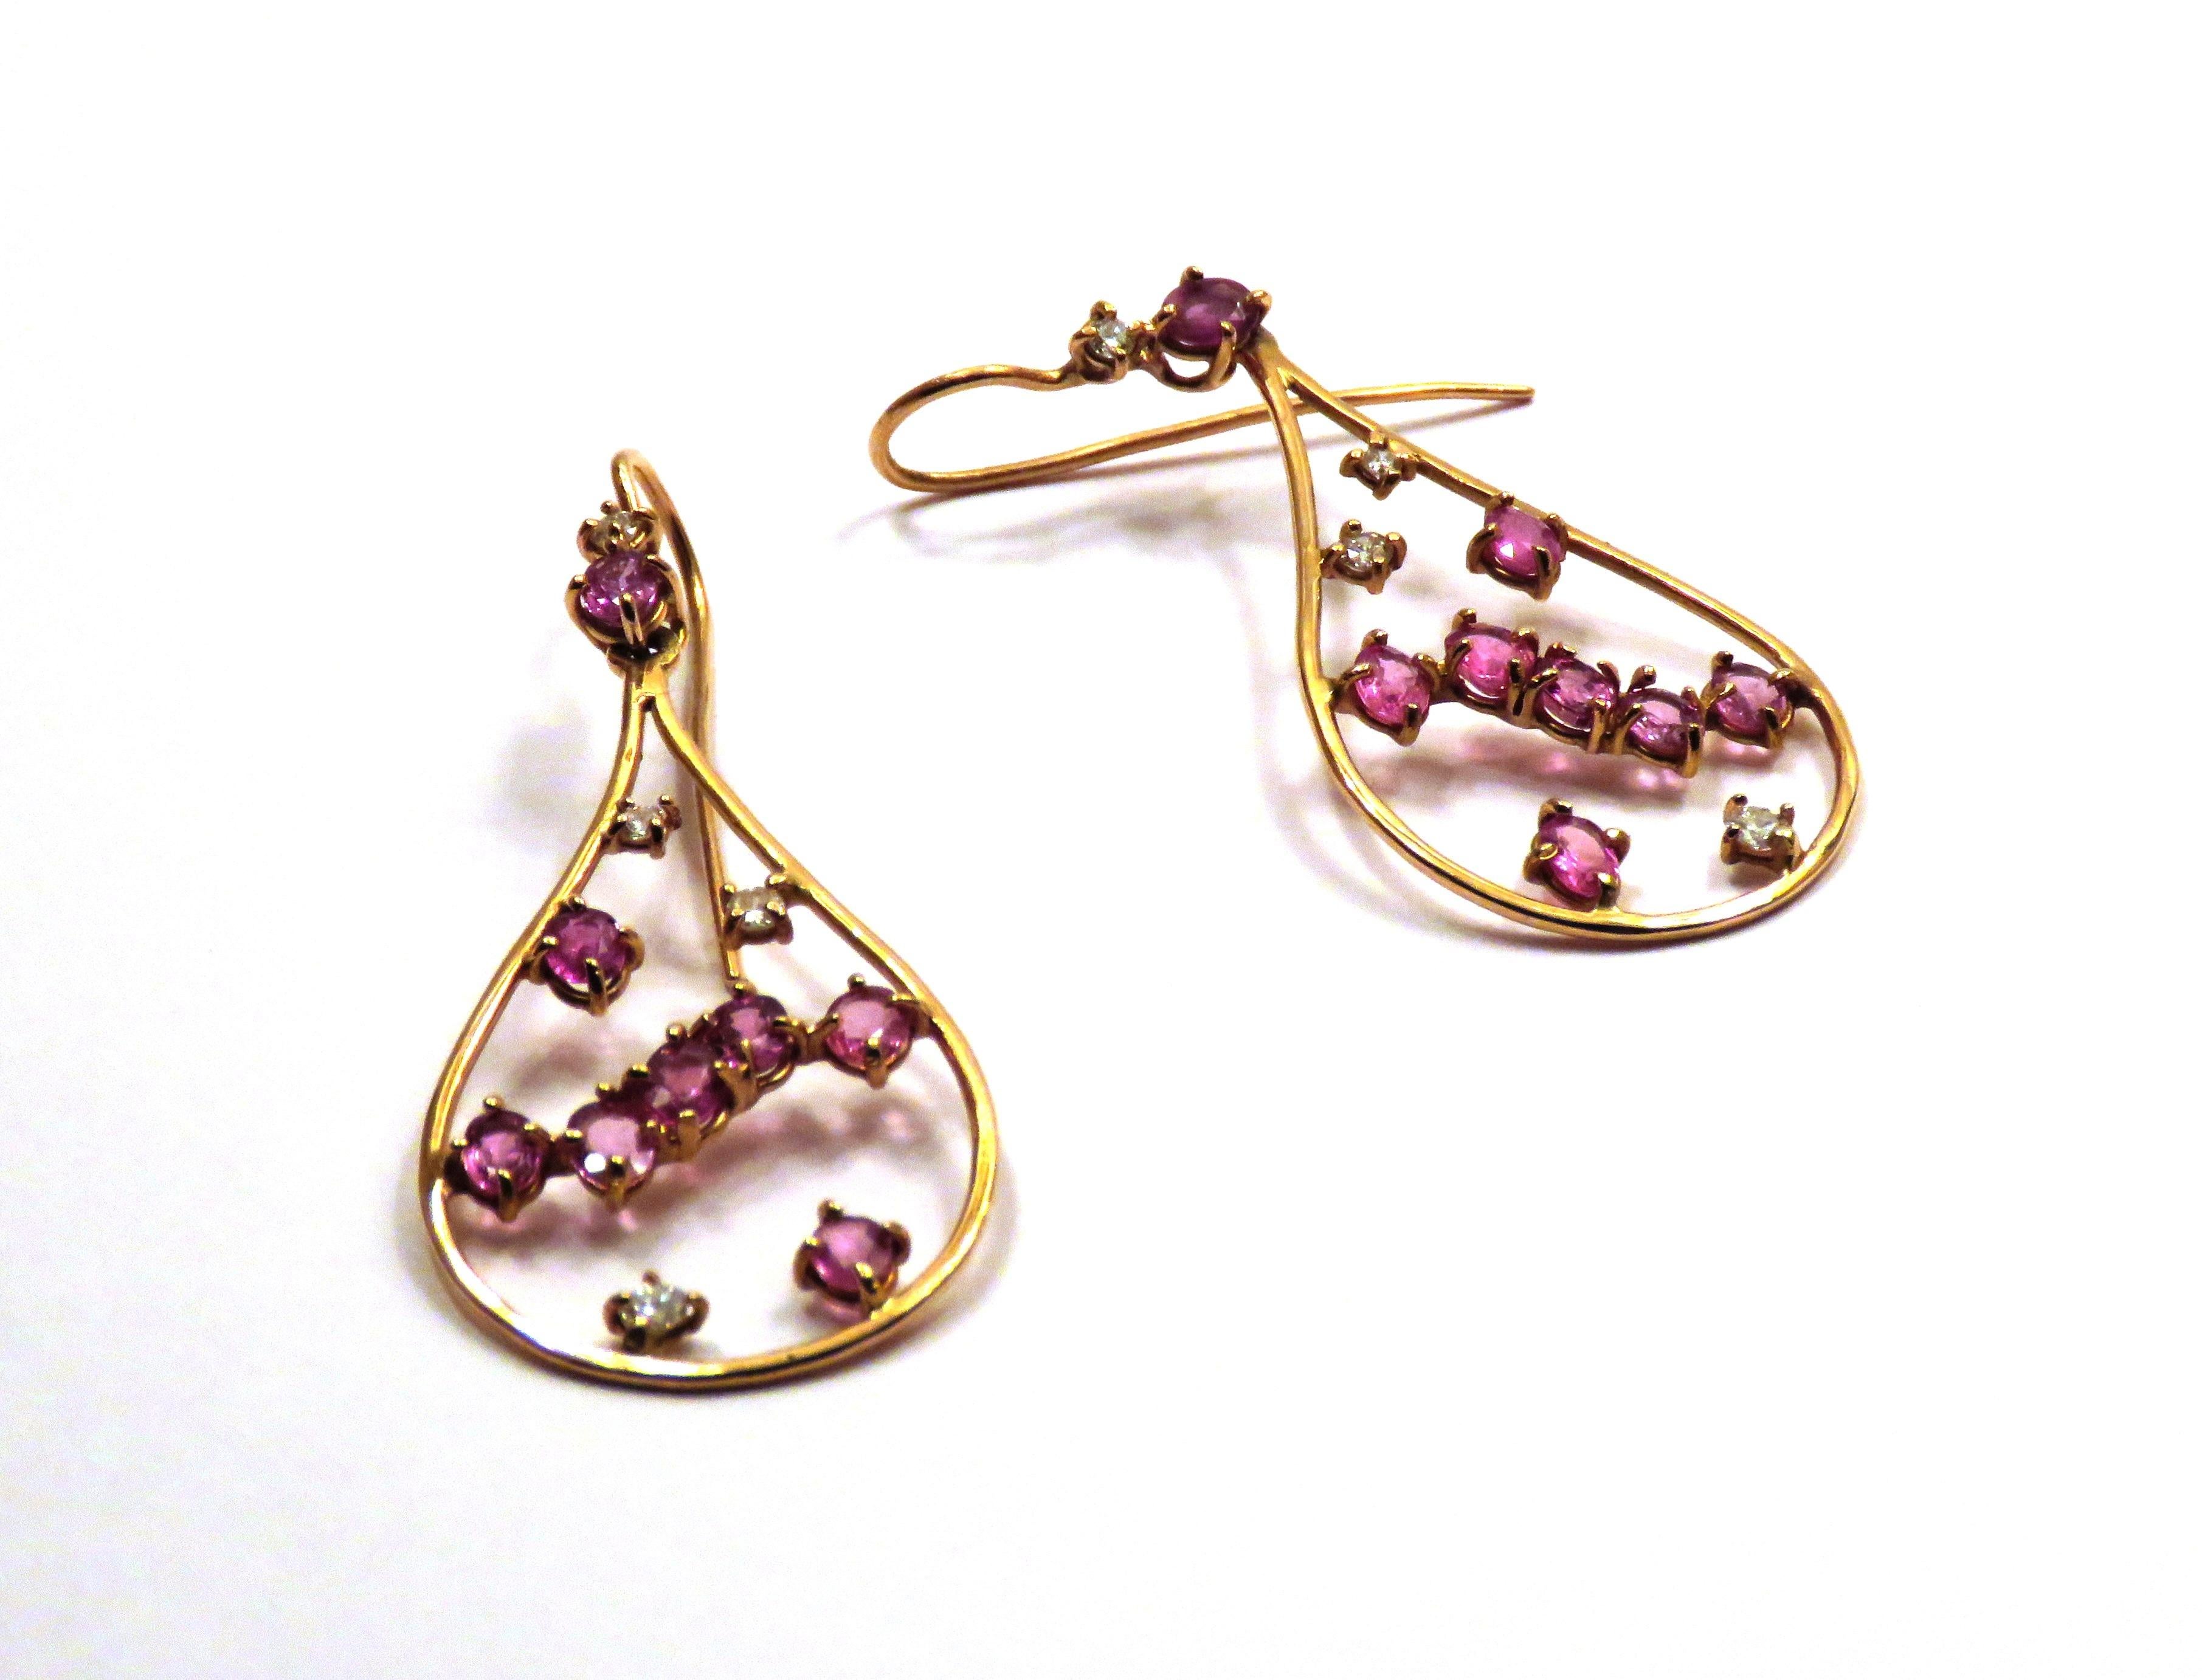 Modern Rose 18 Kt Gold Diamonds Rubies Earrings Handcraft in Italy by Botta Gioielli